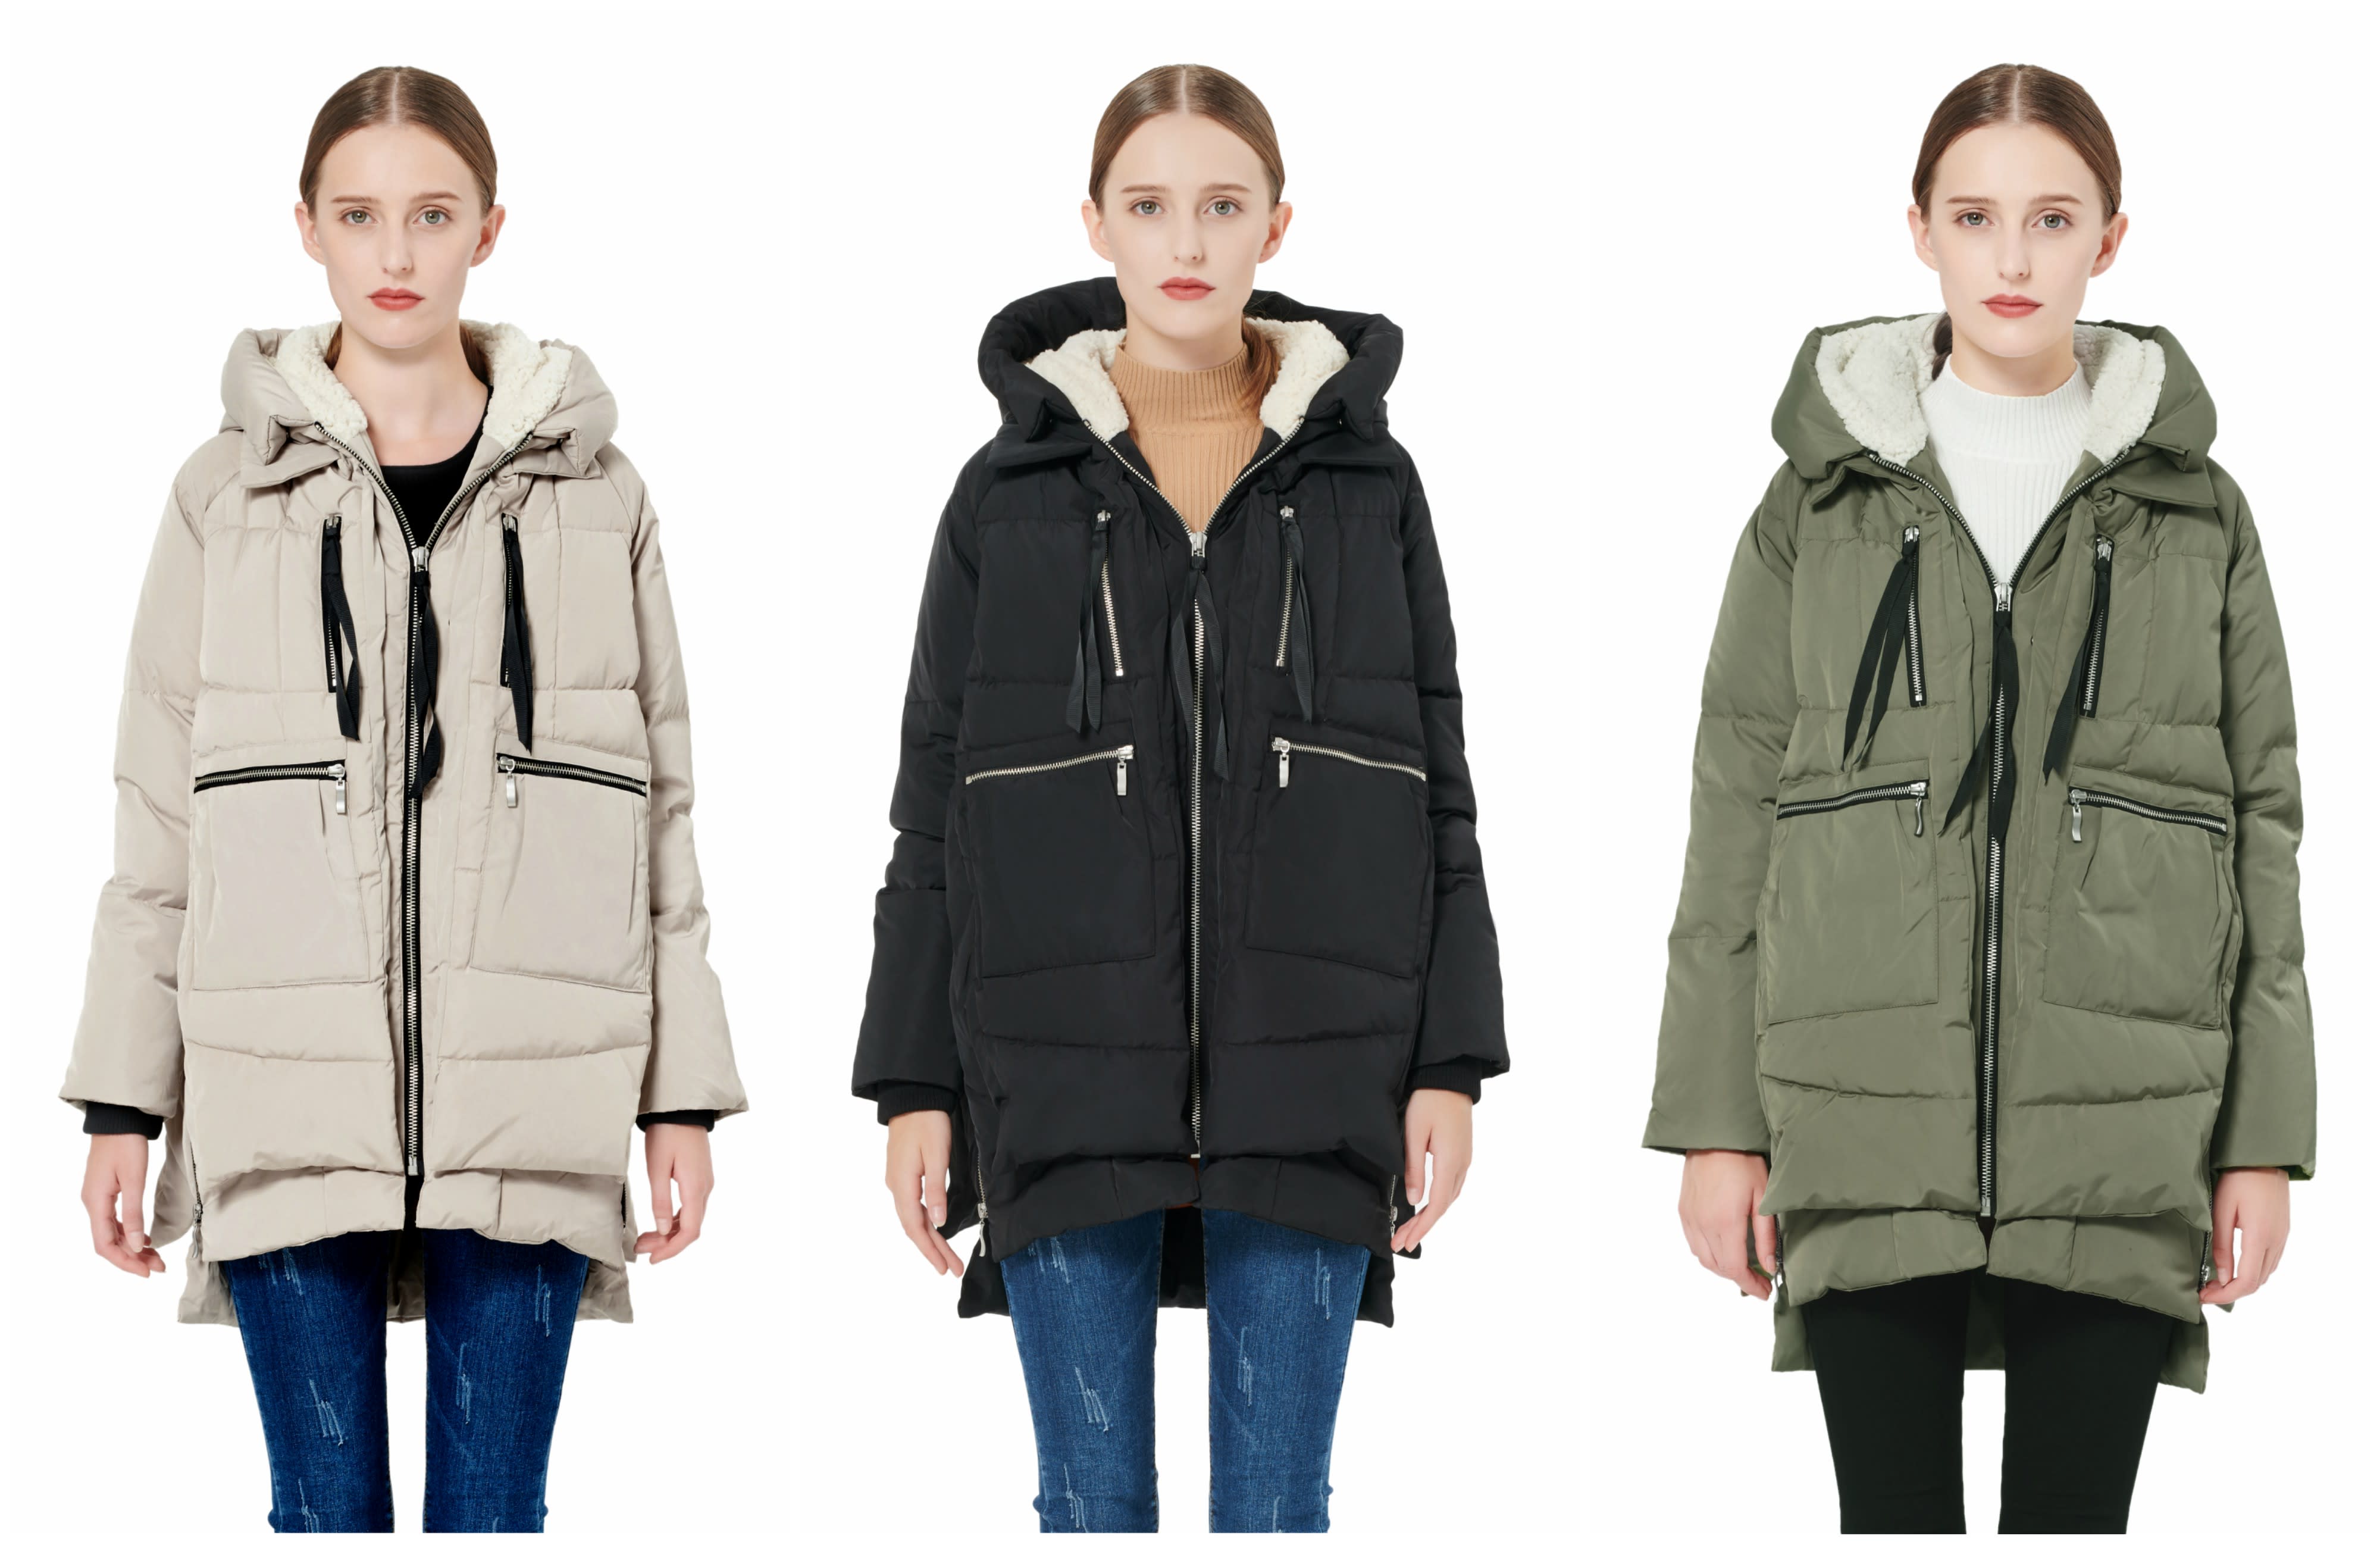 best women's winter jackets on amazon